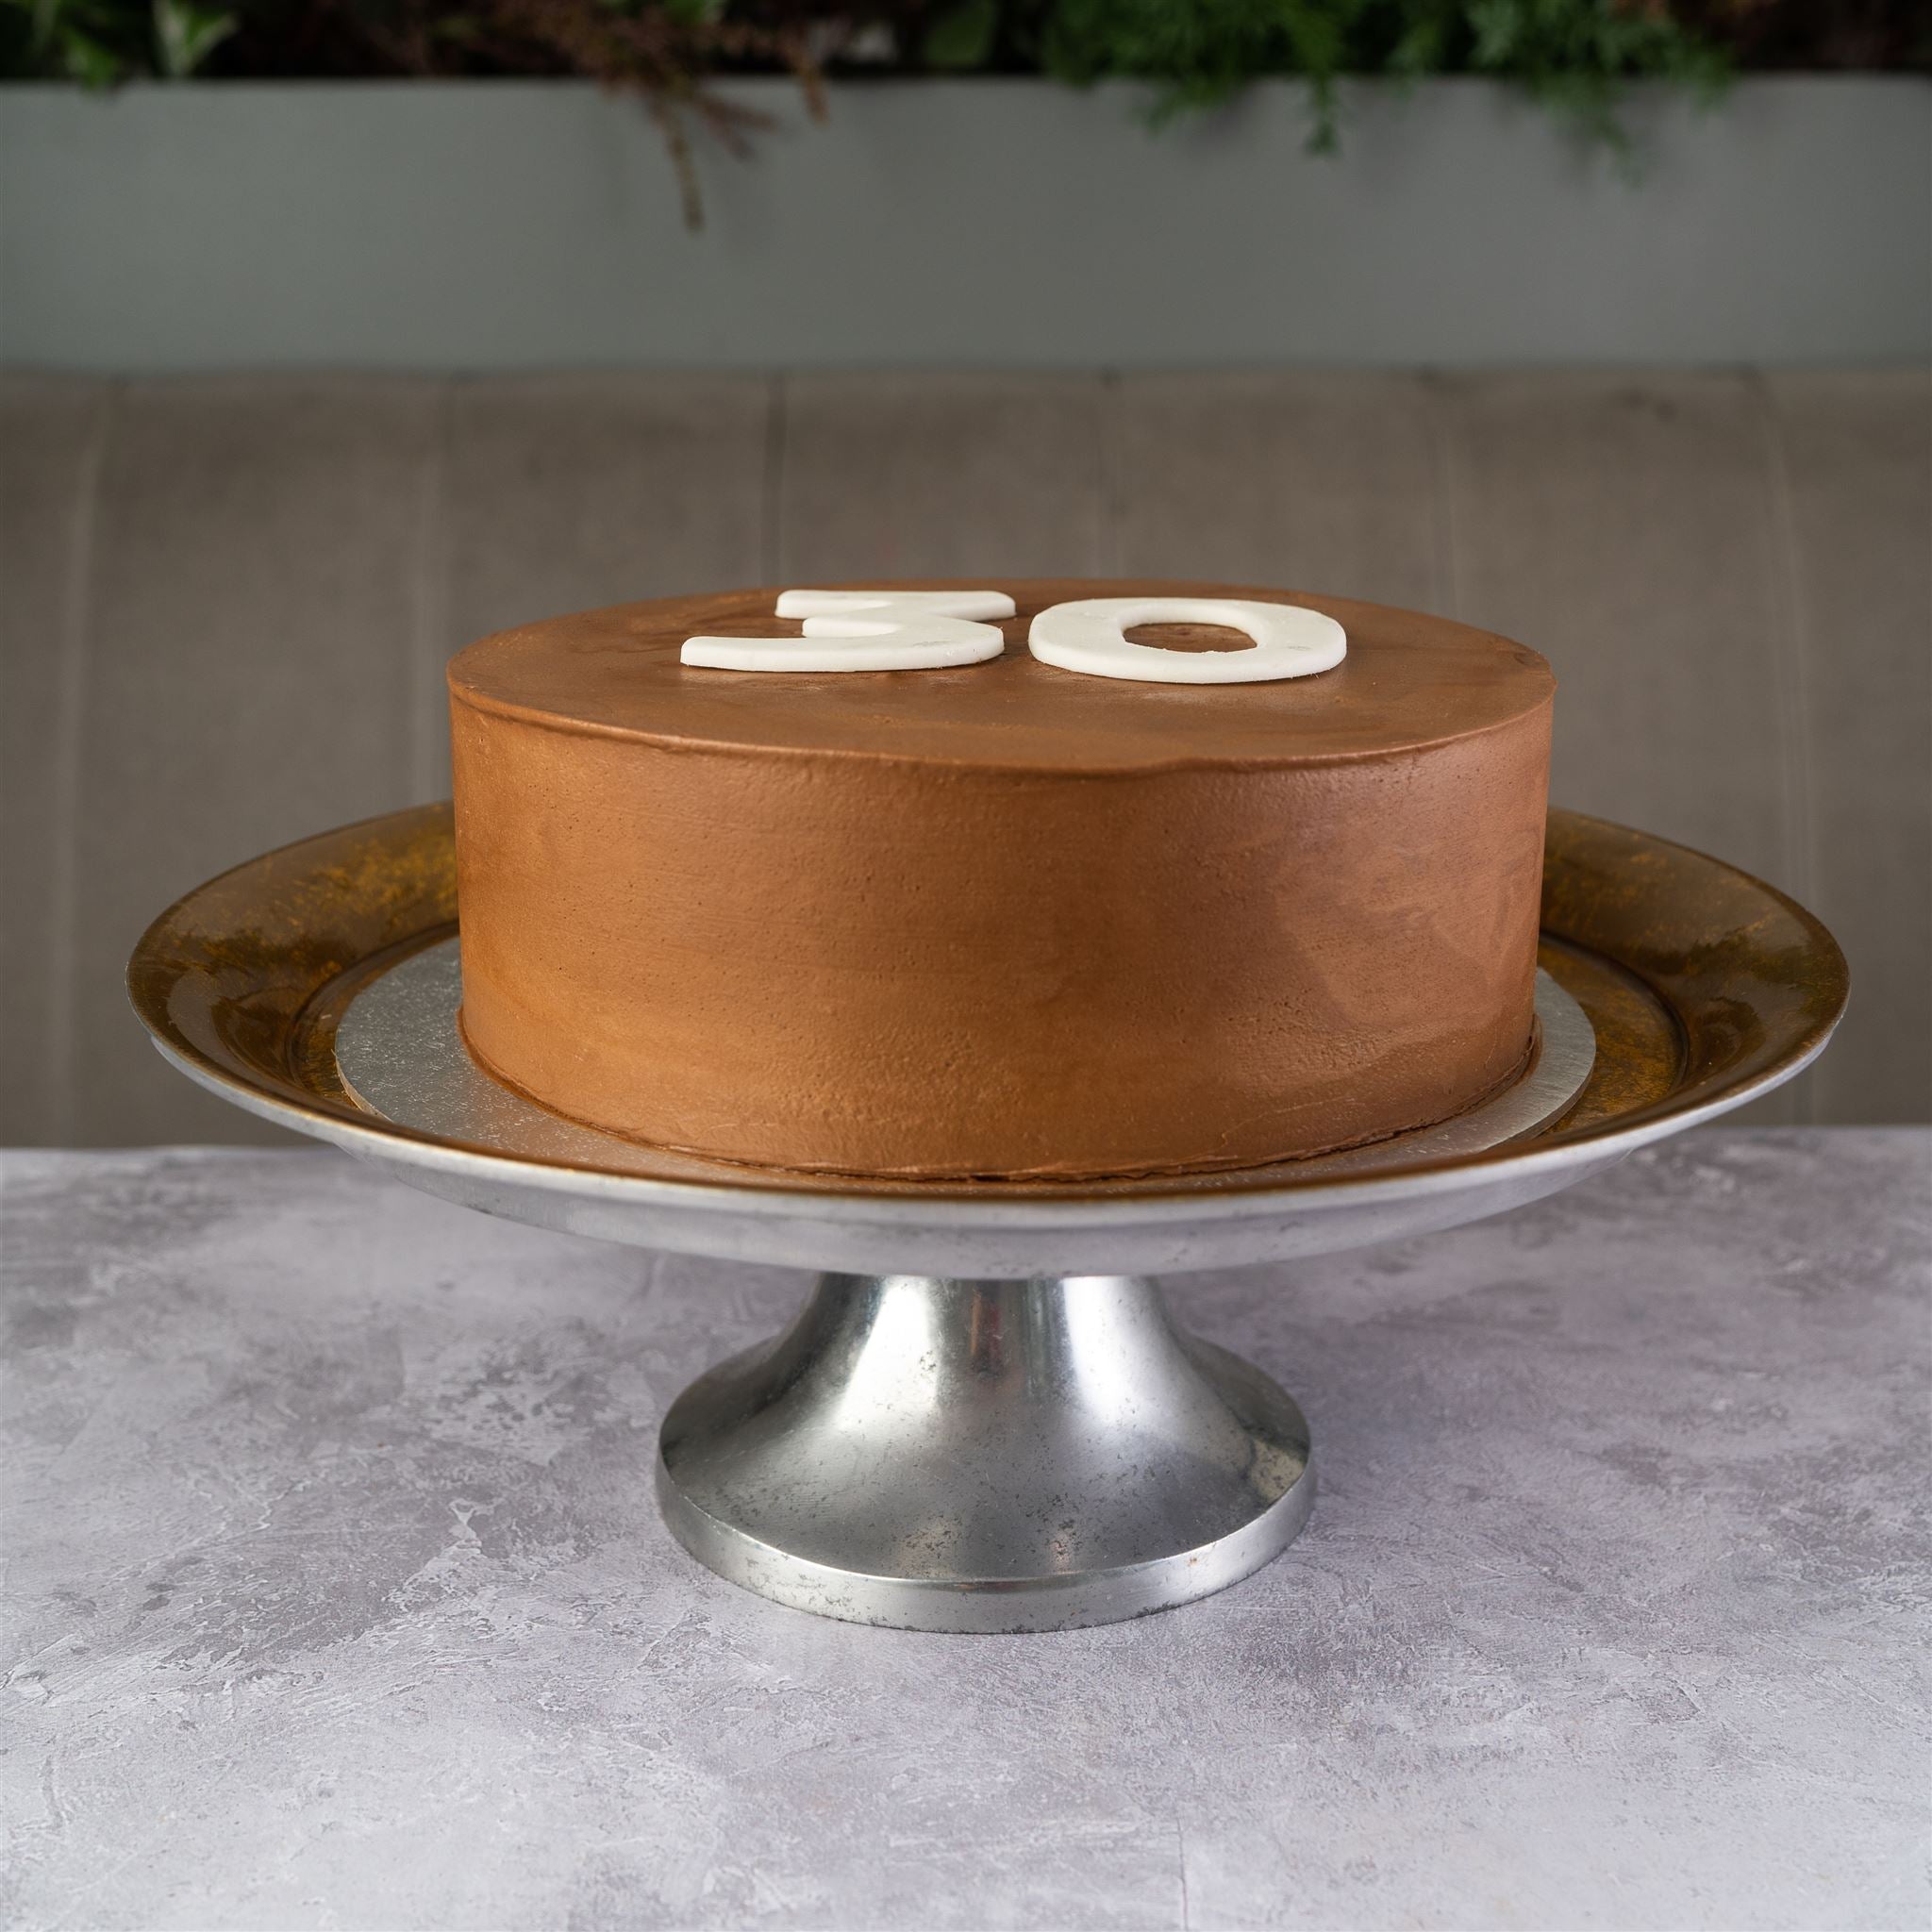 Number 30 Birthday Cake - Jack and Beyond